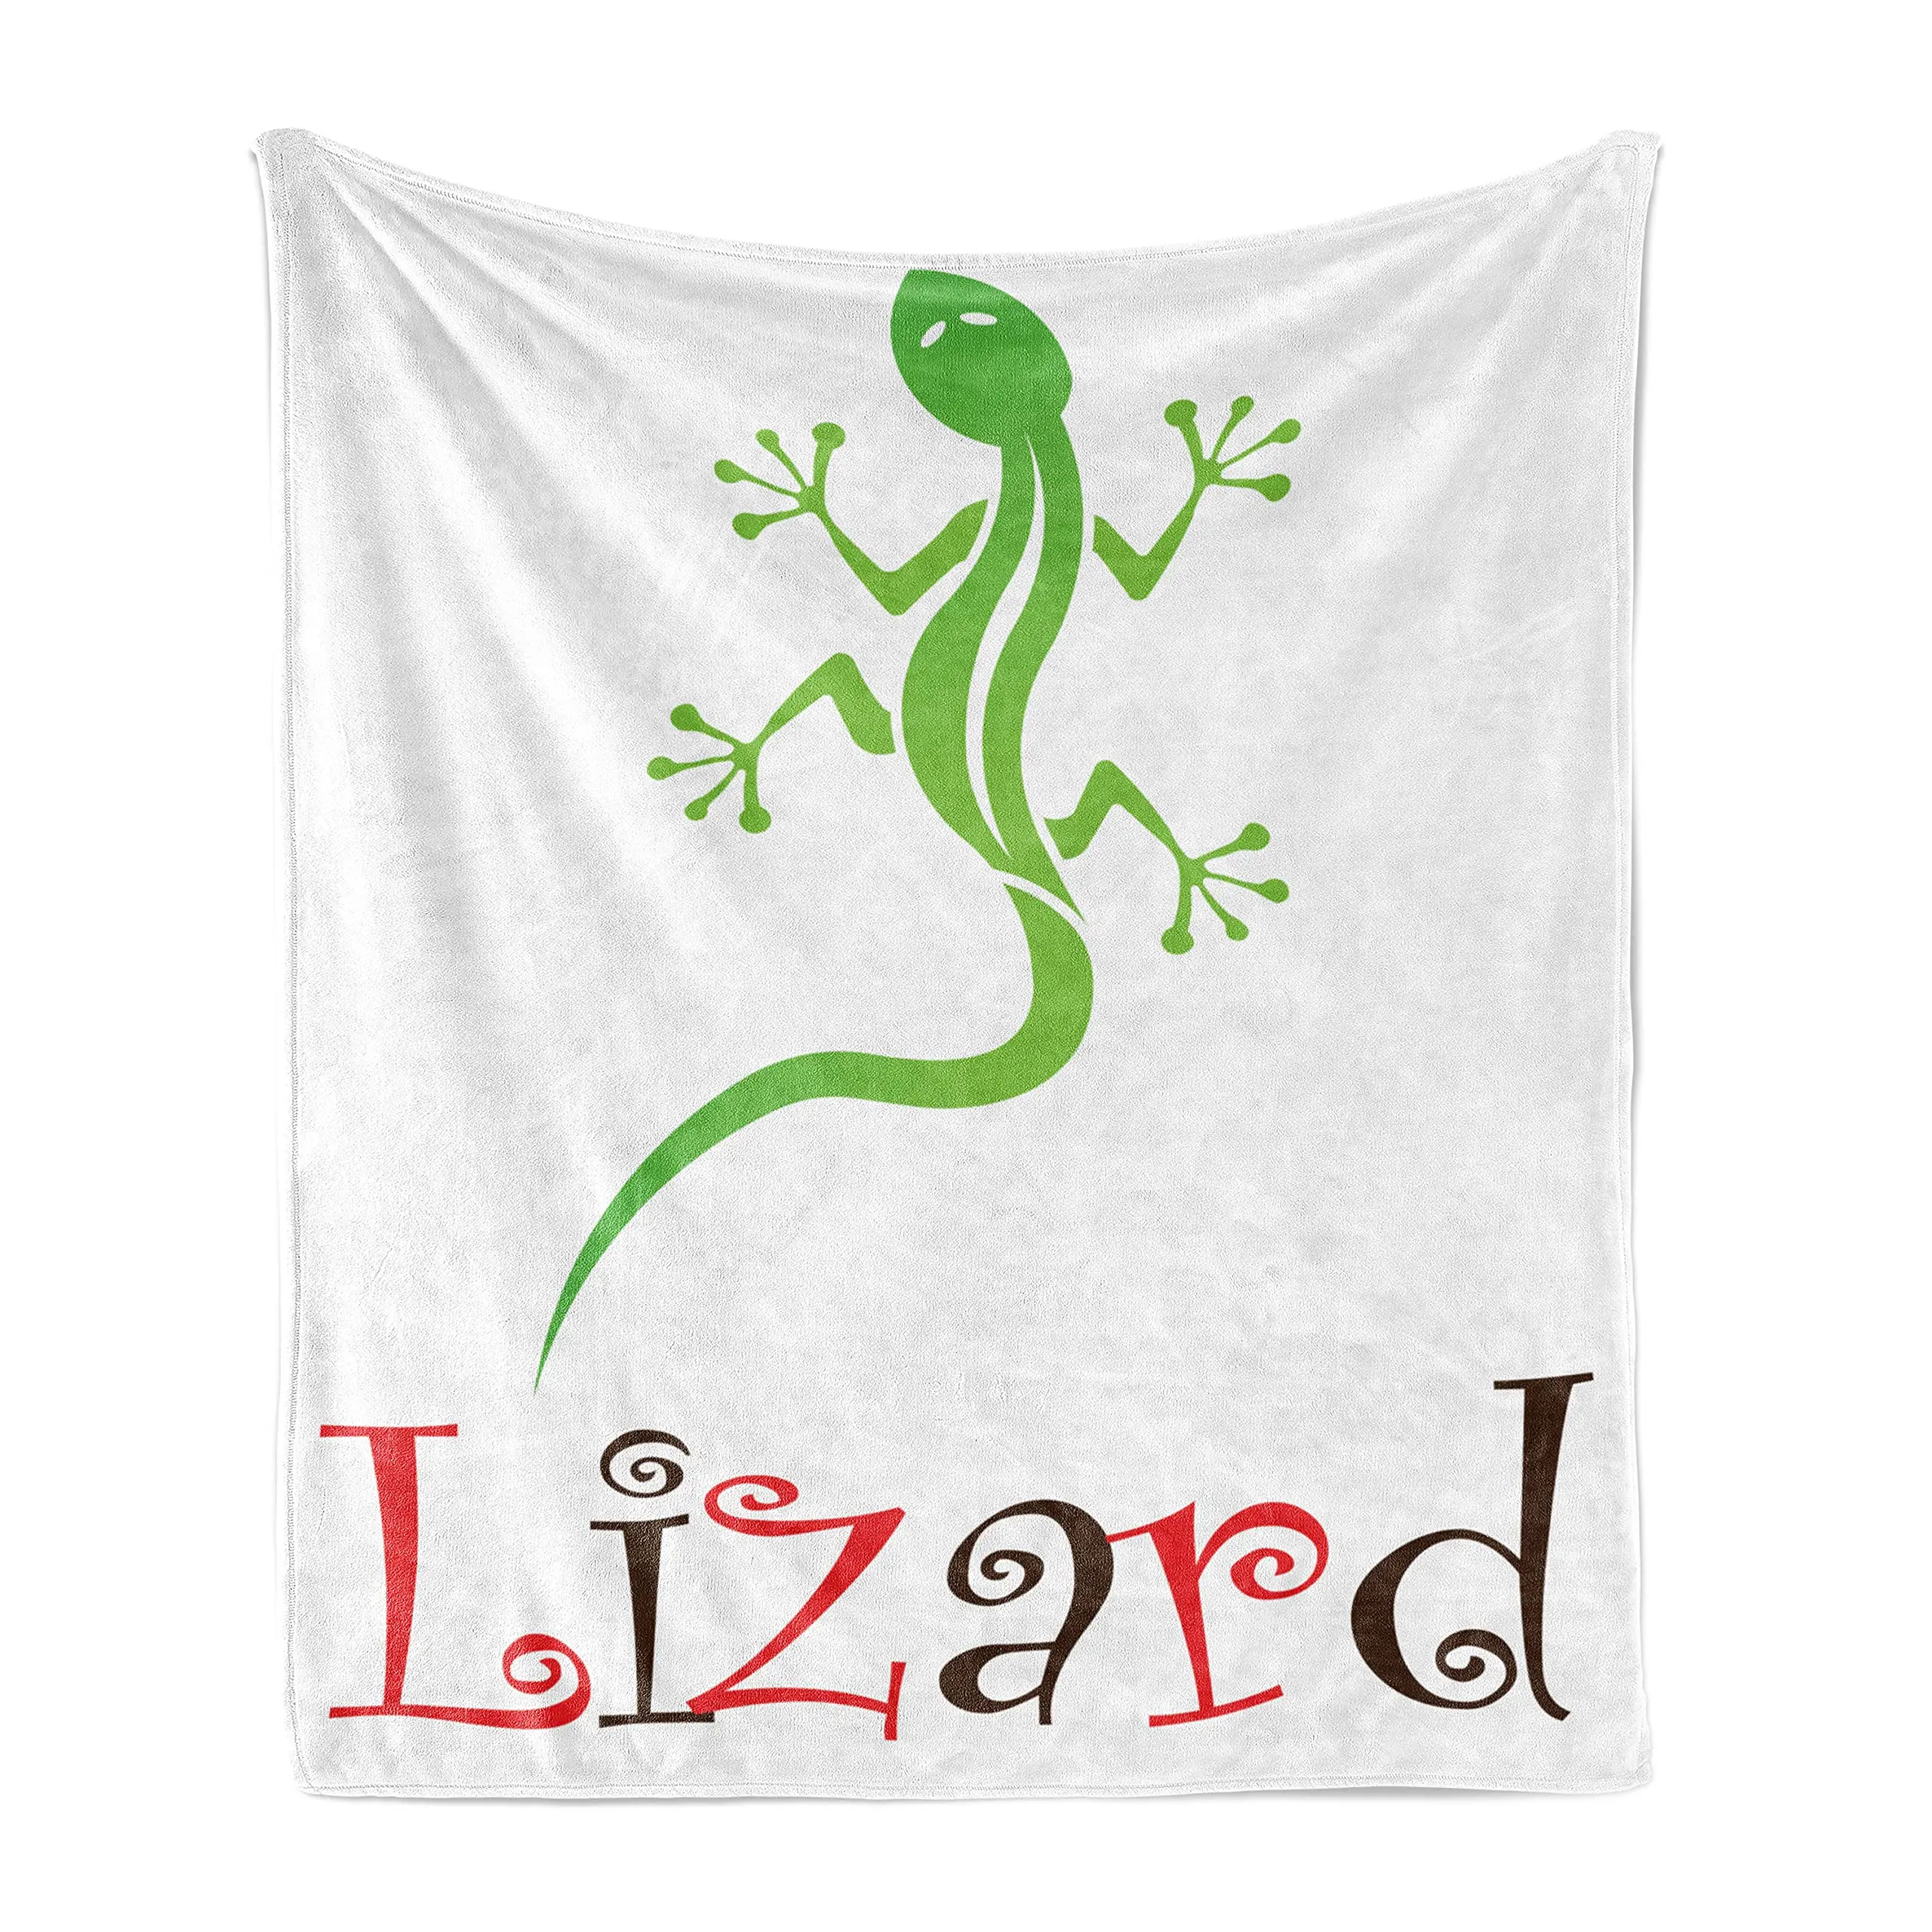 

Reptile Lizard Throw Blanket All Season Warm Fuzzy Lightweight Plush Blankets for Living Ultra Soft Flannel Fleece Bed Blanket